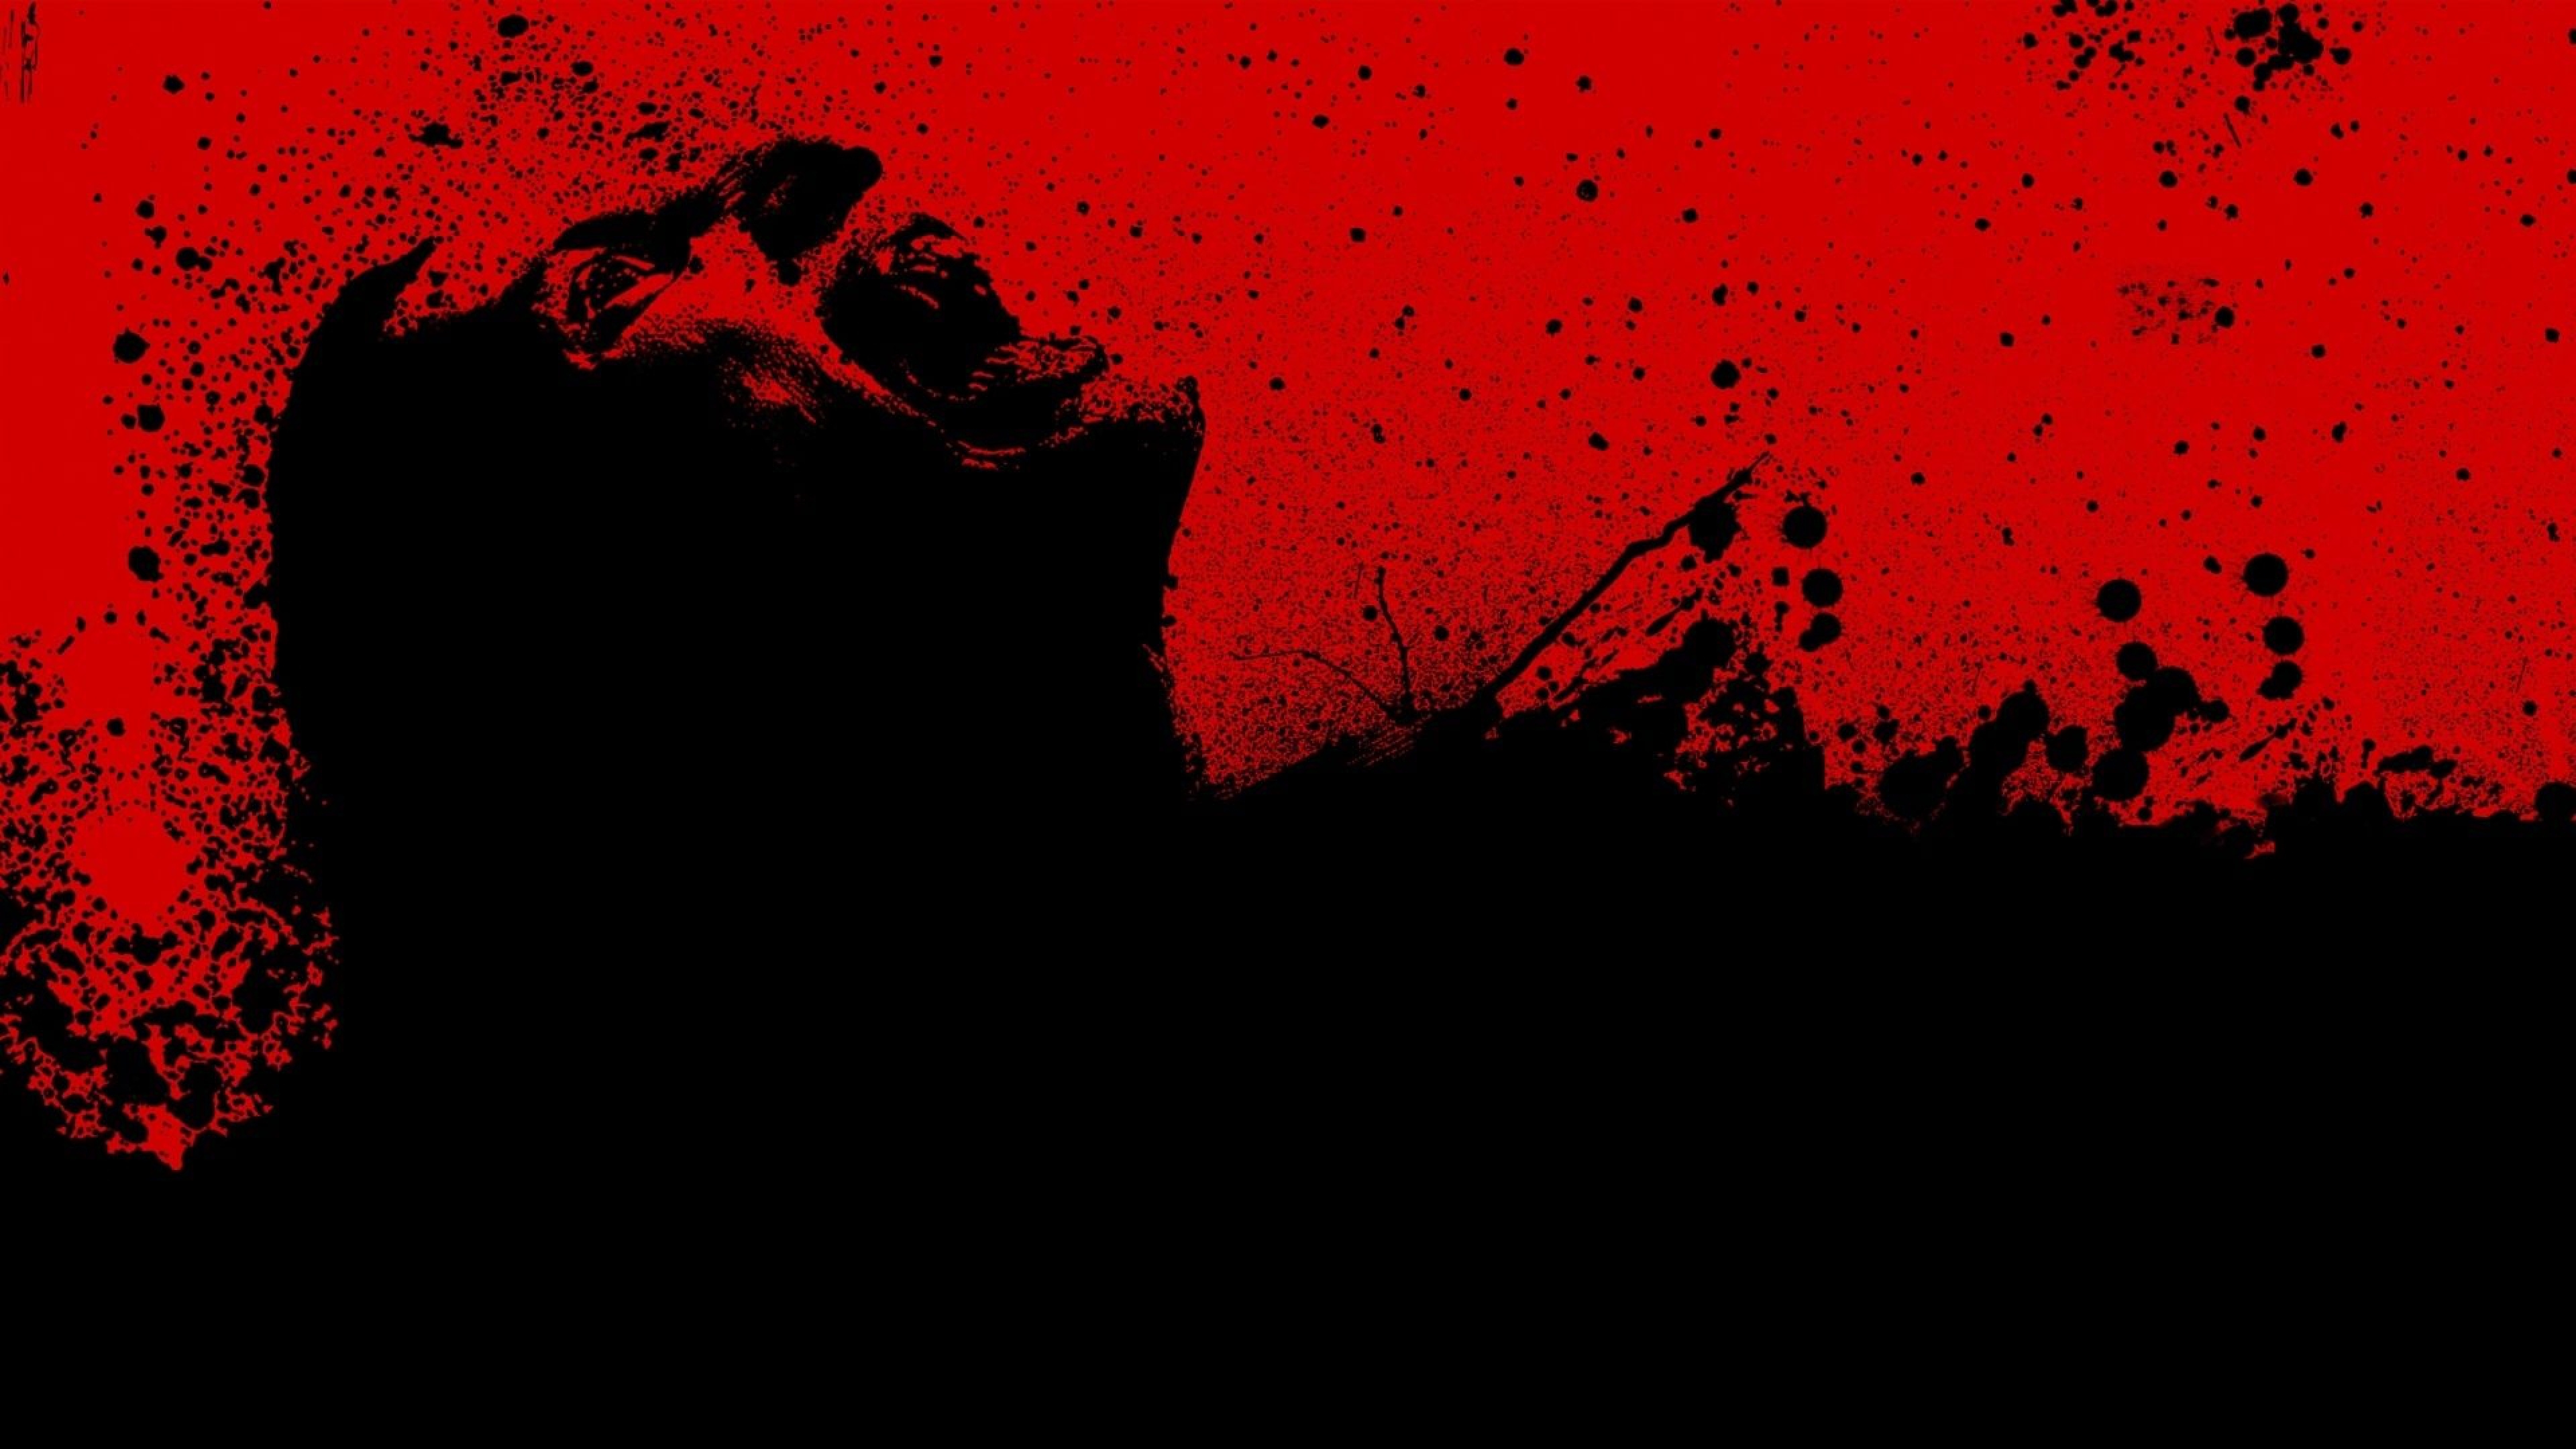  30 days of night Red Black Blood Wallpaper Background 4K Ultra HD 3840x2160